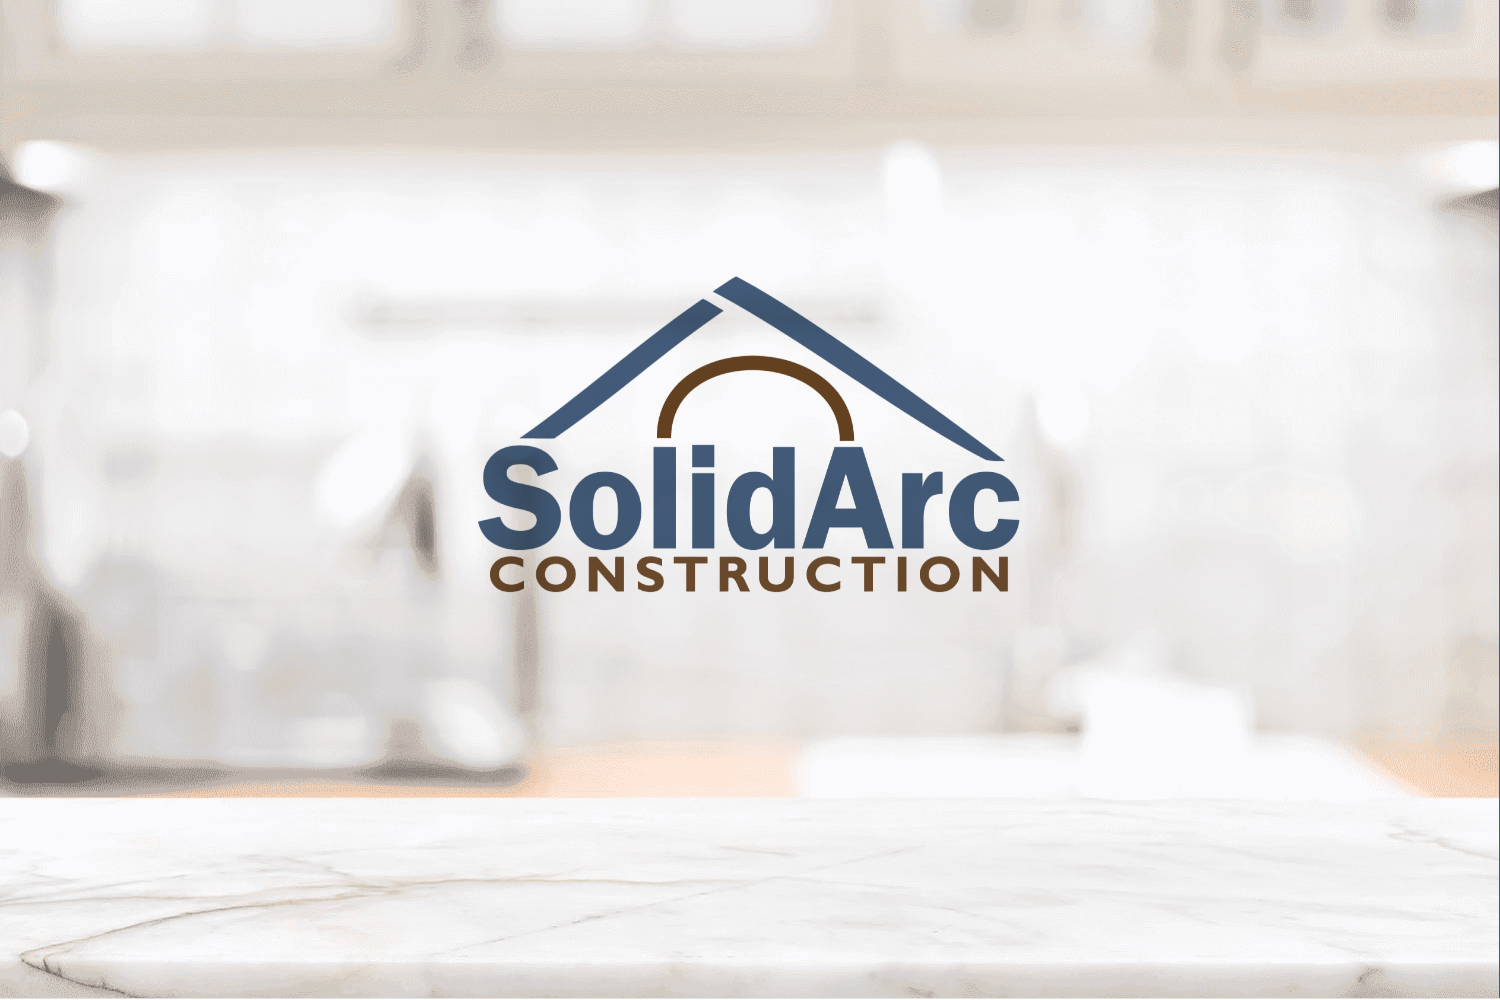 SolidArc Construction